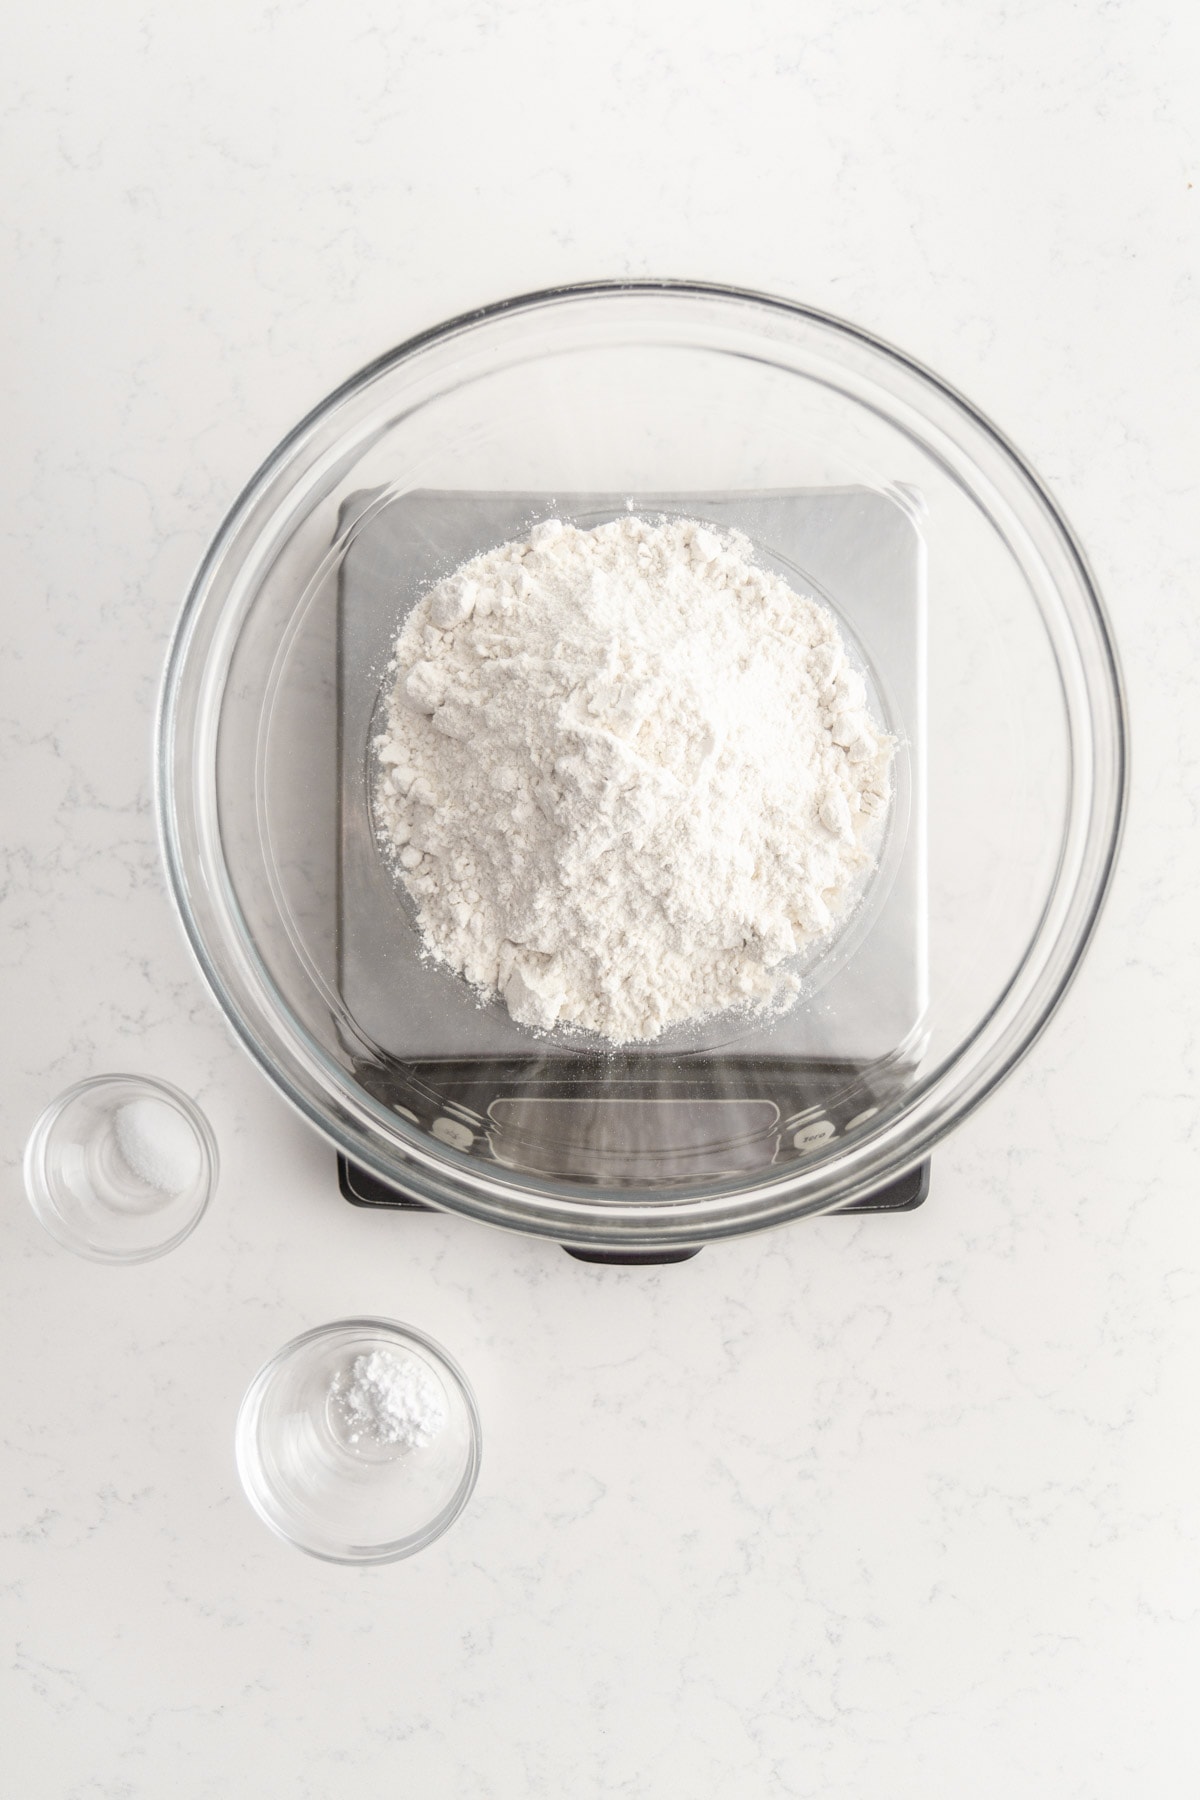 flour, baking powder and salt in bowls